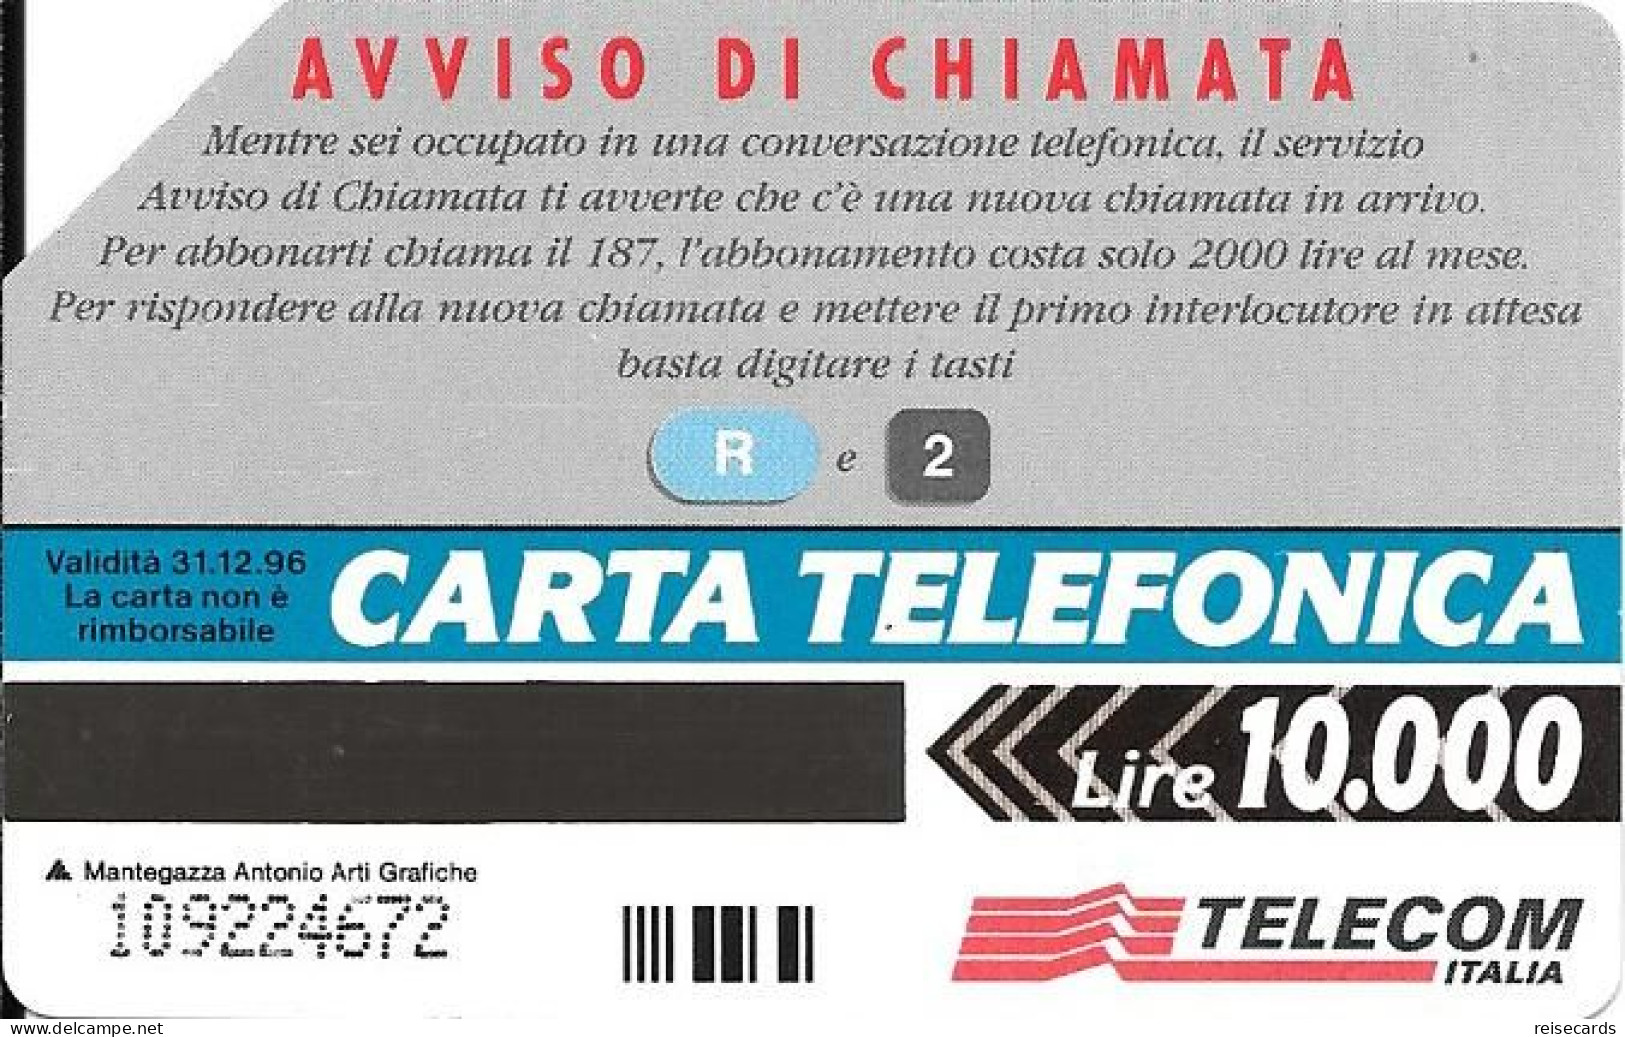 Italy: Telecom Italia - R2 Aviso Di Chiamata - Public Advertising